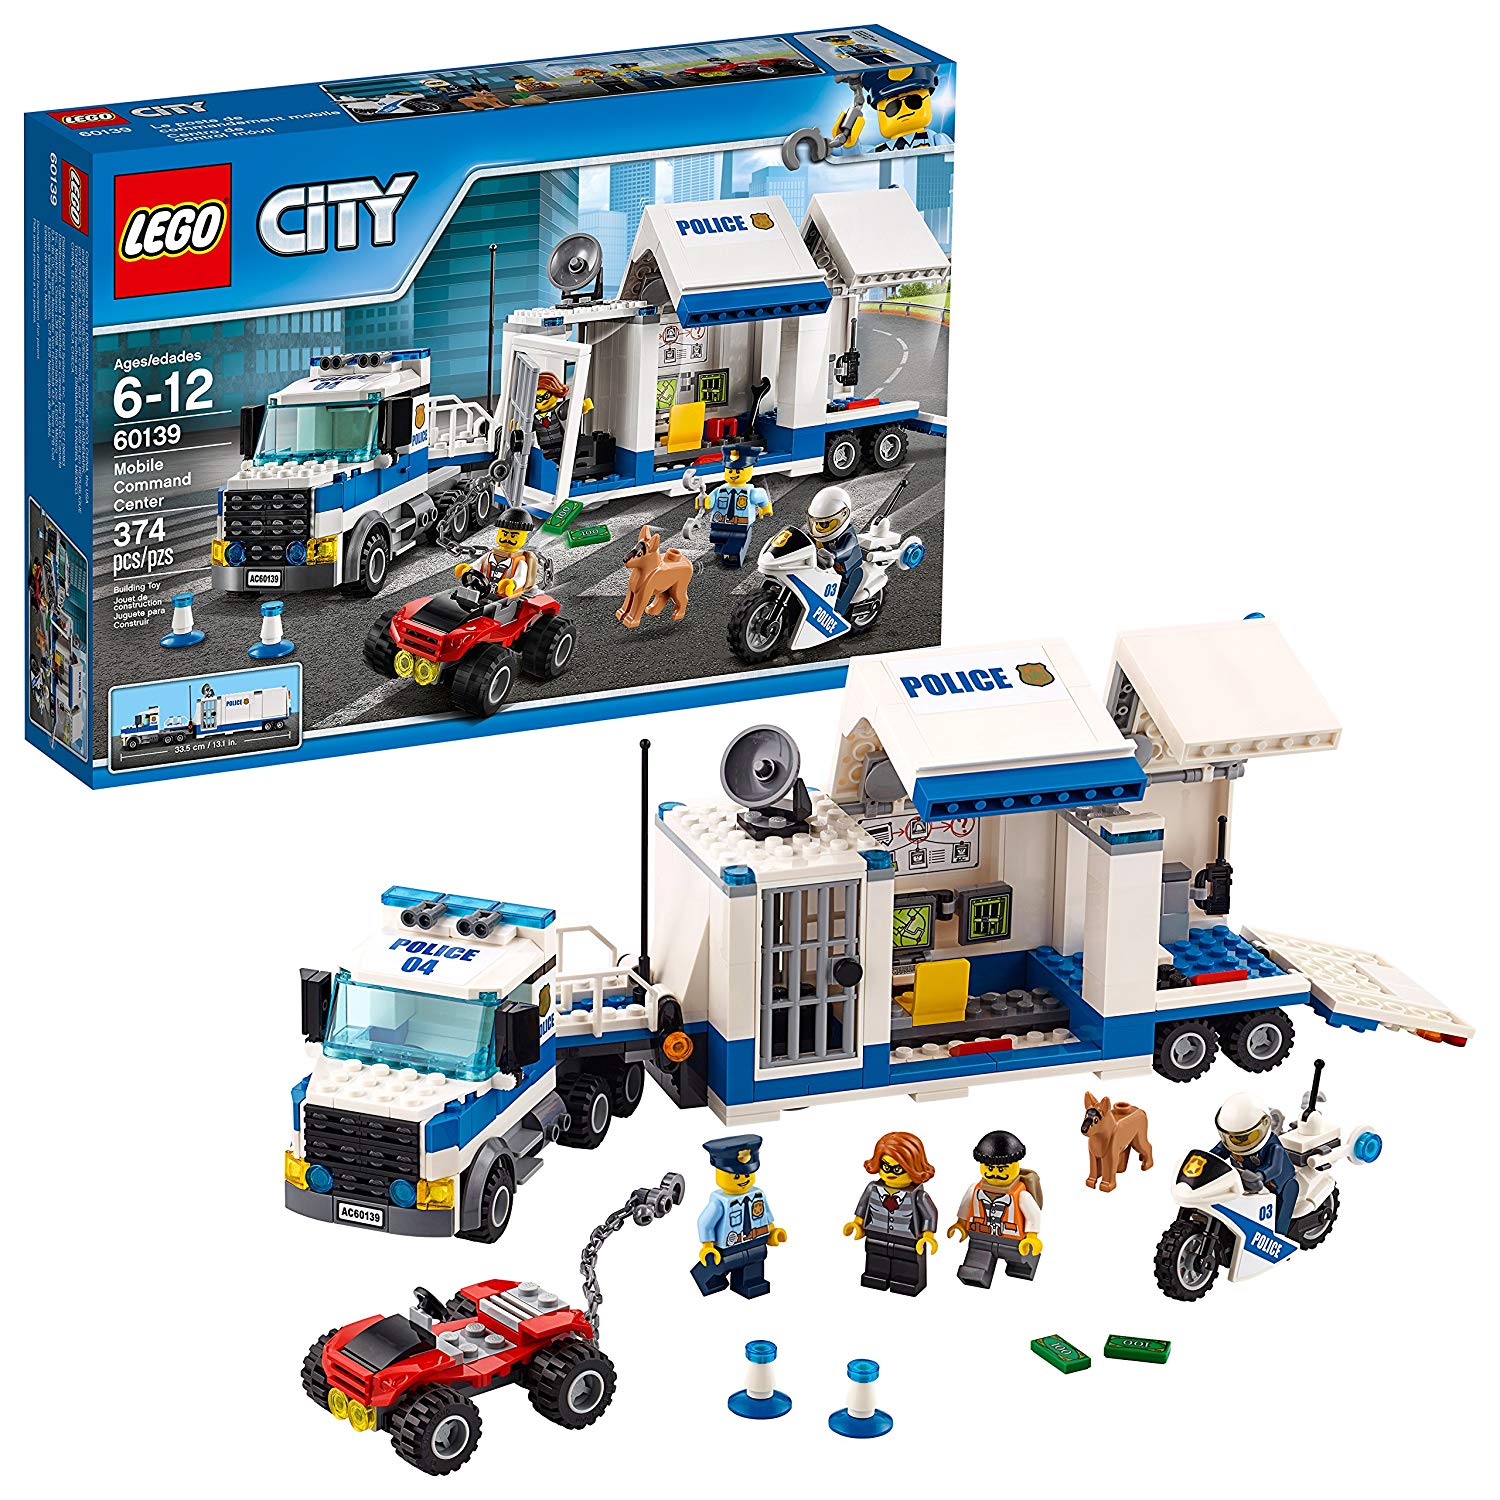 Lego City Police Mobile Command Center Building Kit